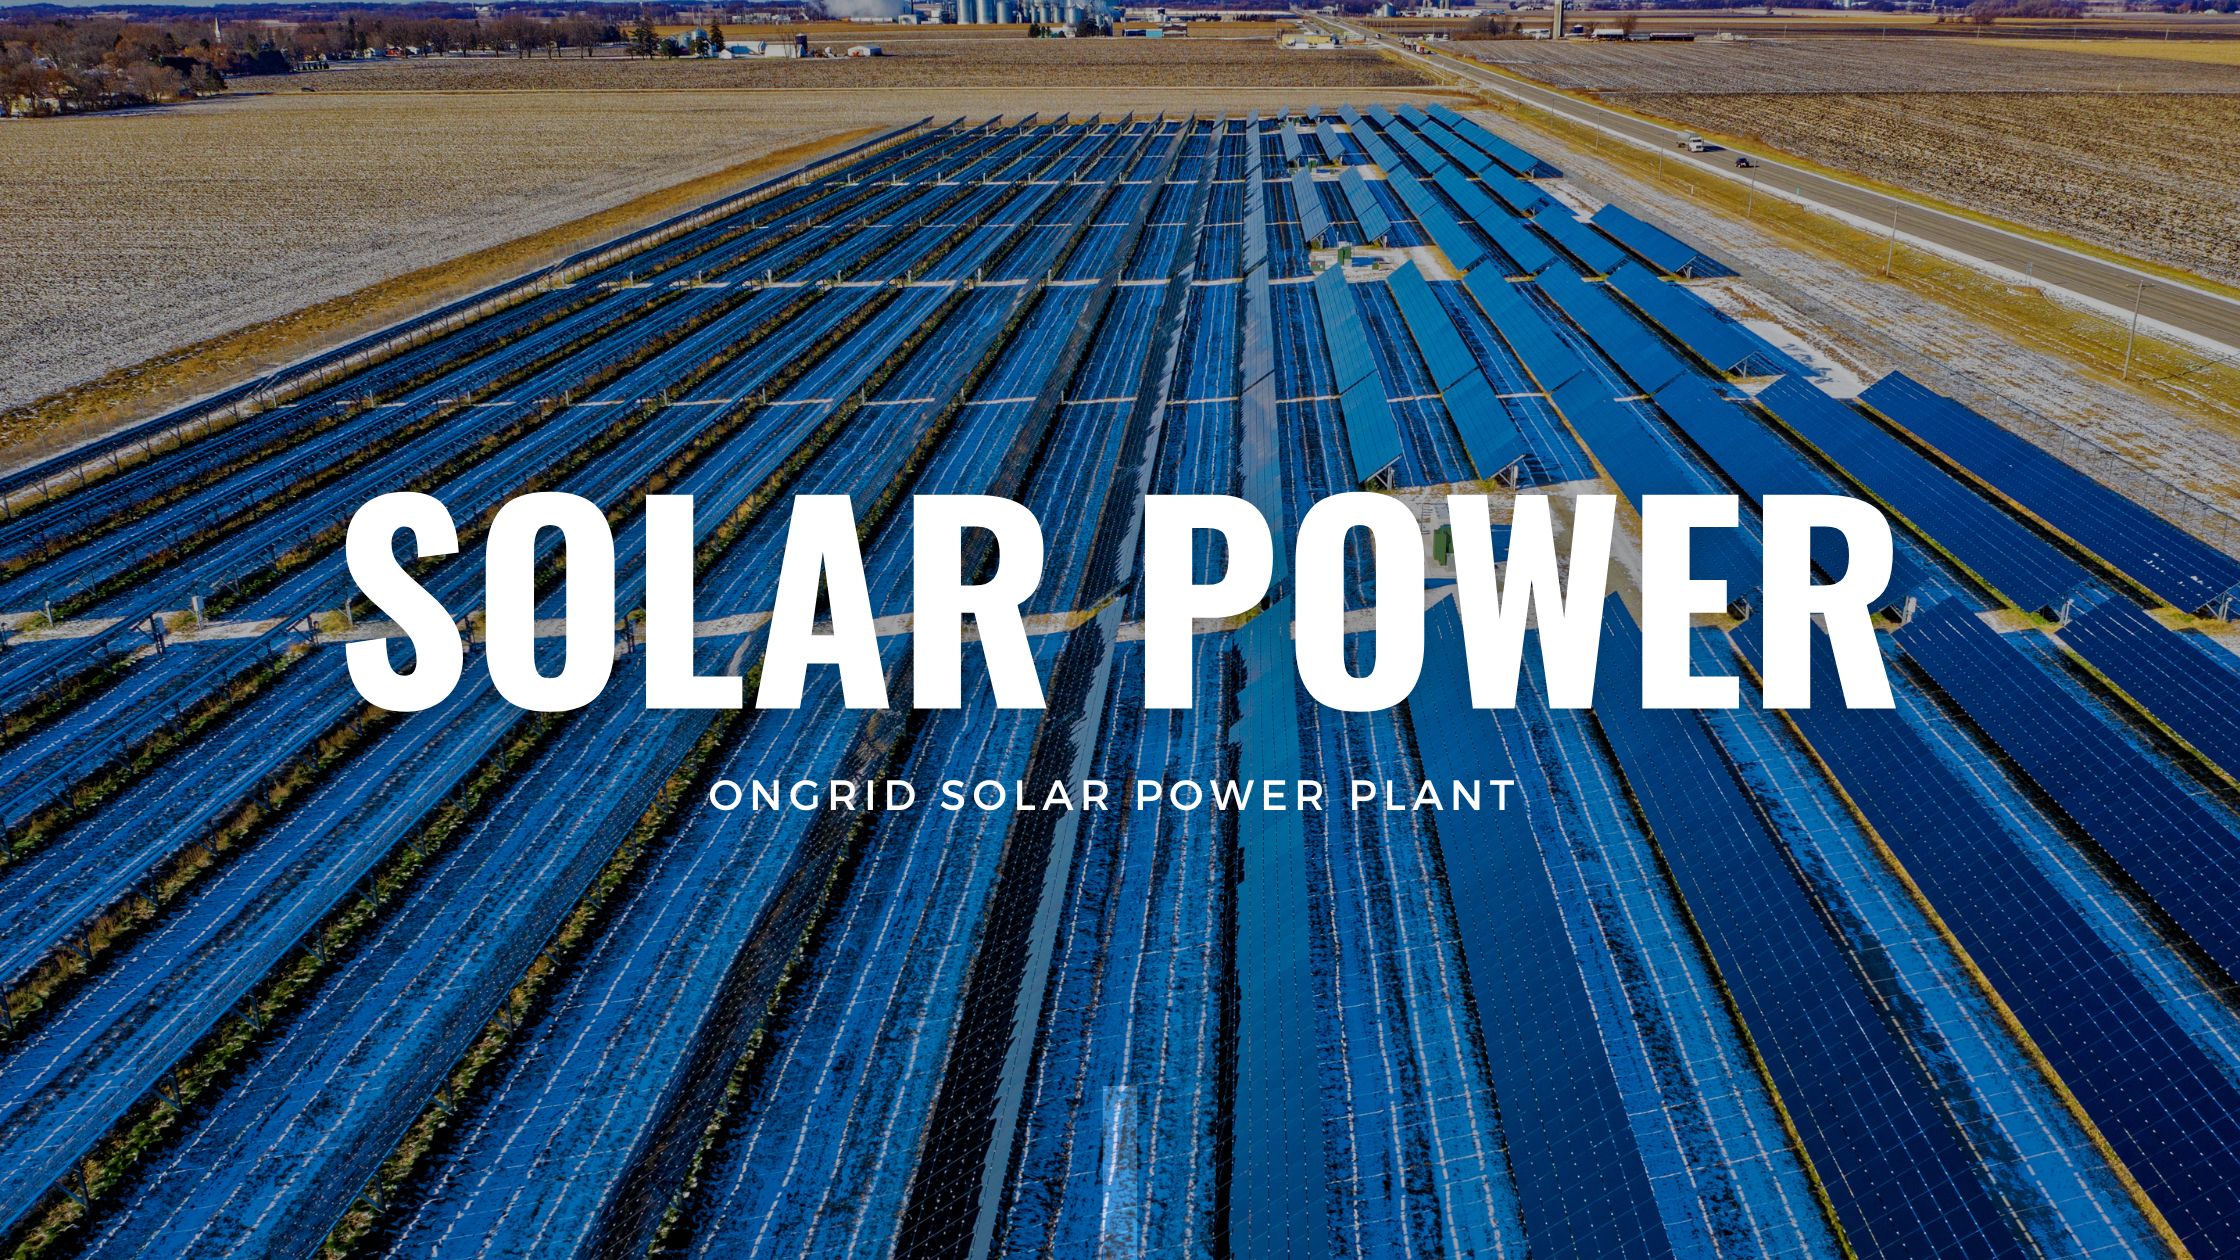 Ongrid Solar Power Plant